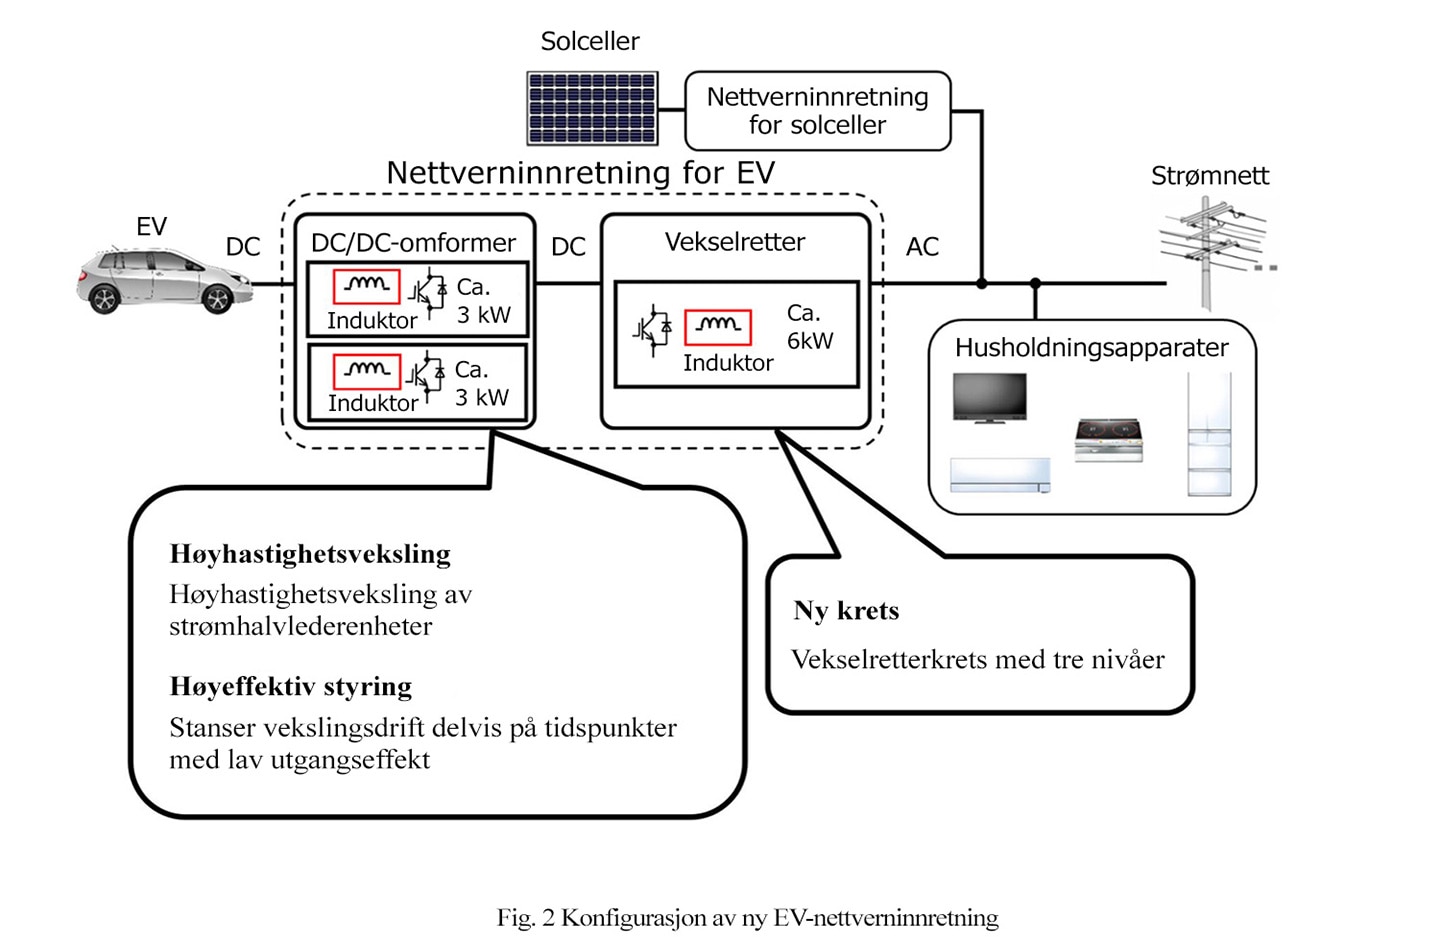 Fig. 2 Konfigurasjon av ny EV-nettverninnretning